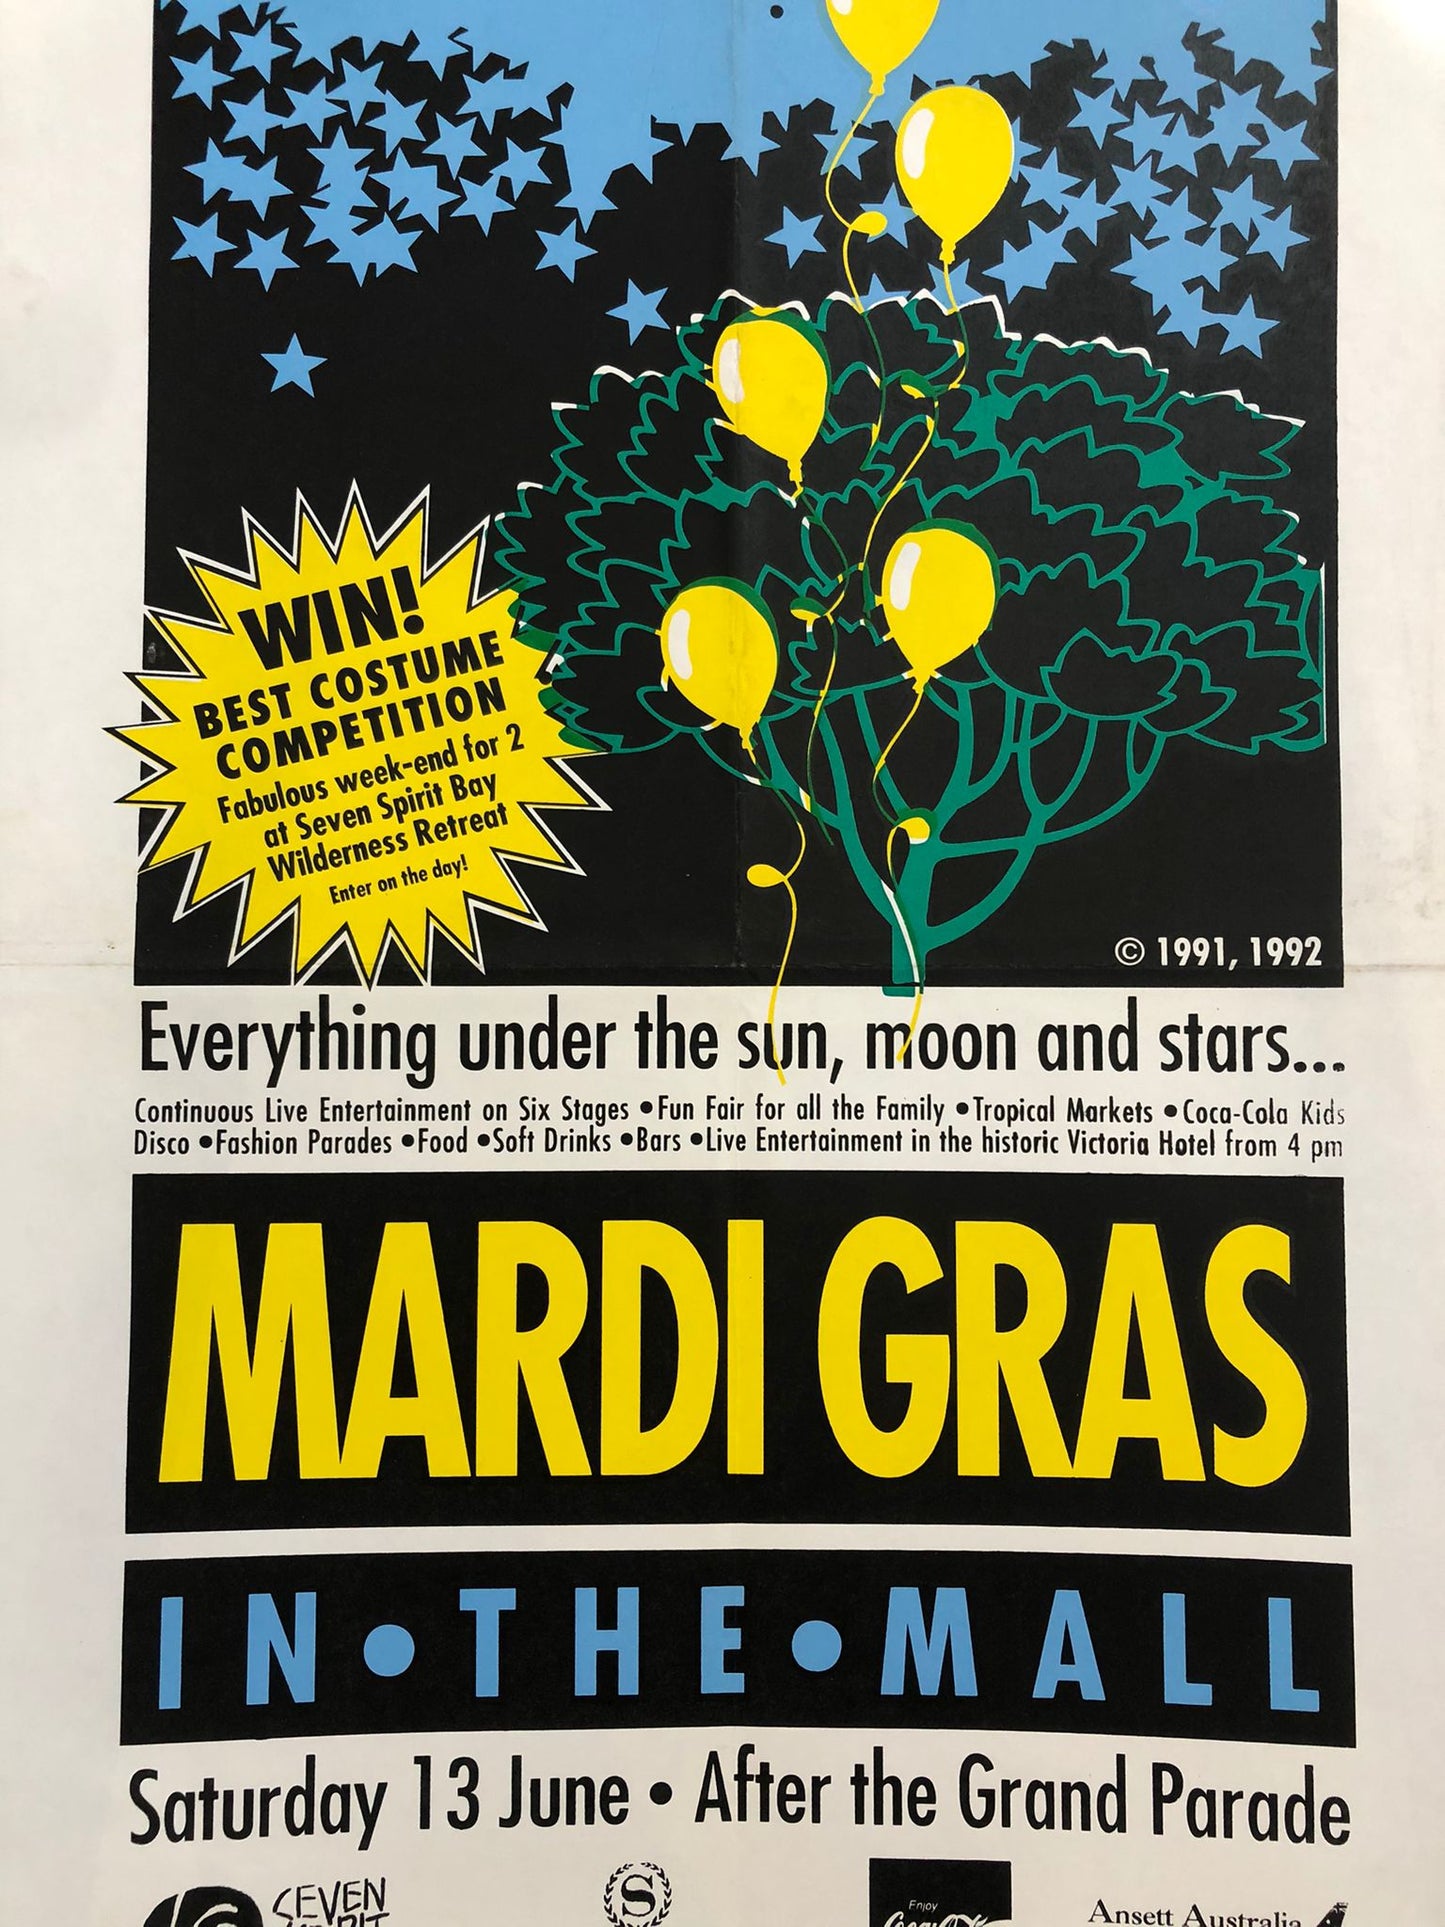 Mardi Gras "In the Mall" Advertisement